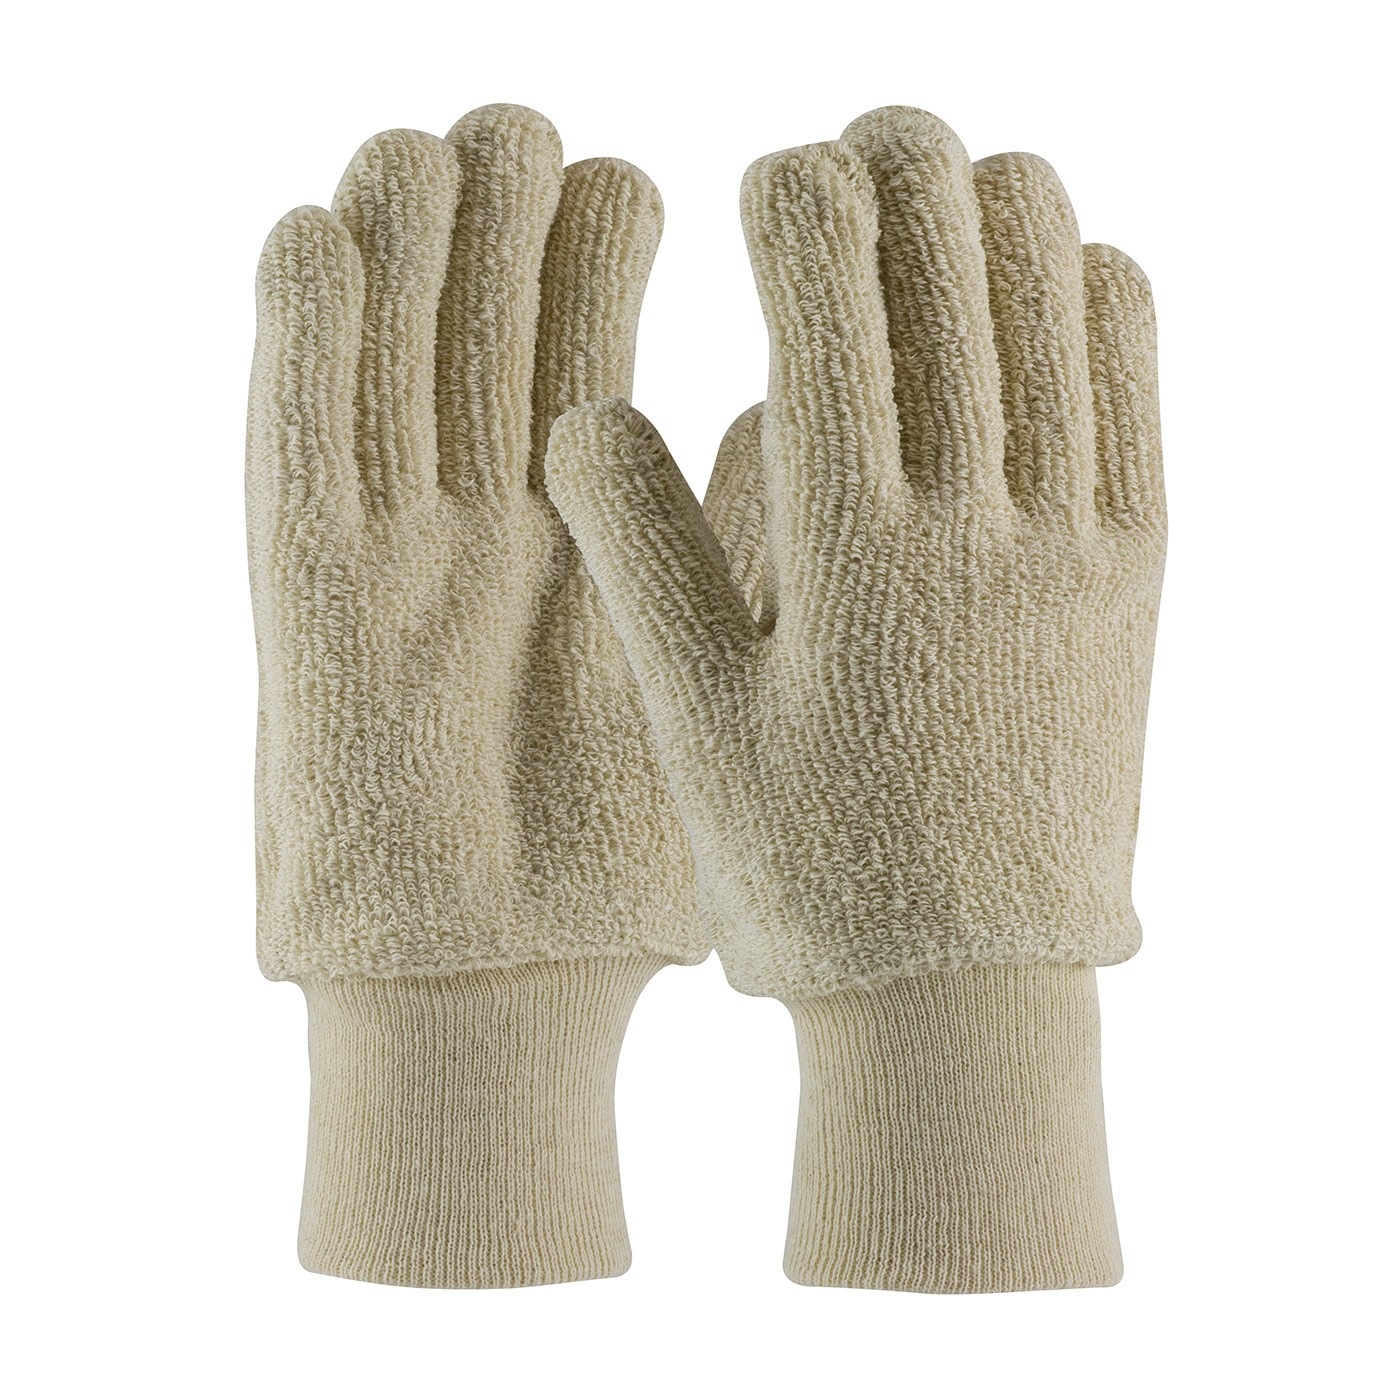 PIP® Terry Cloth Seamless Knit Glove - 18 oz  (#42-C713)